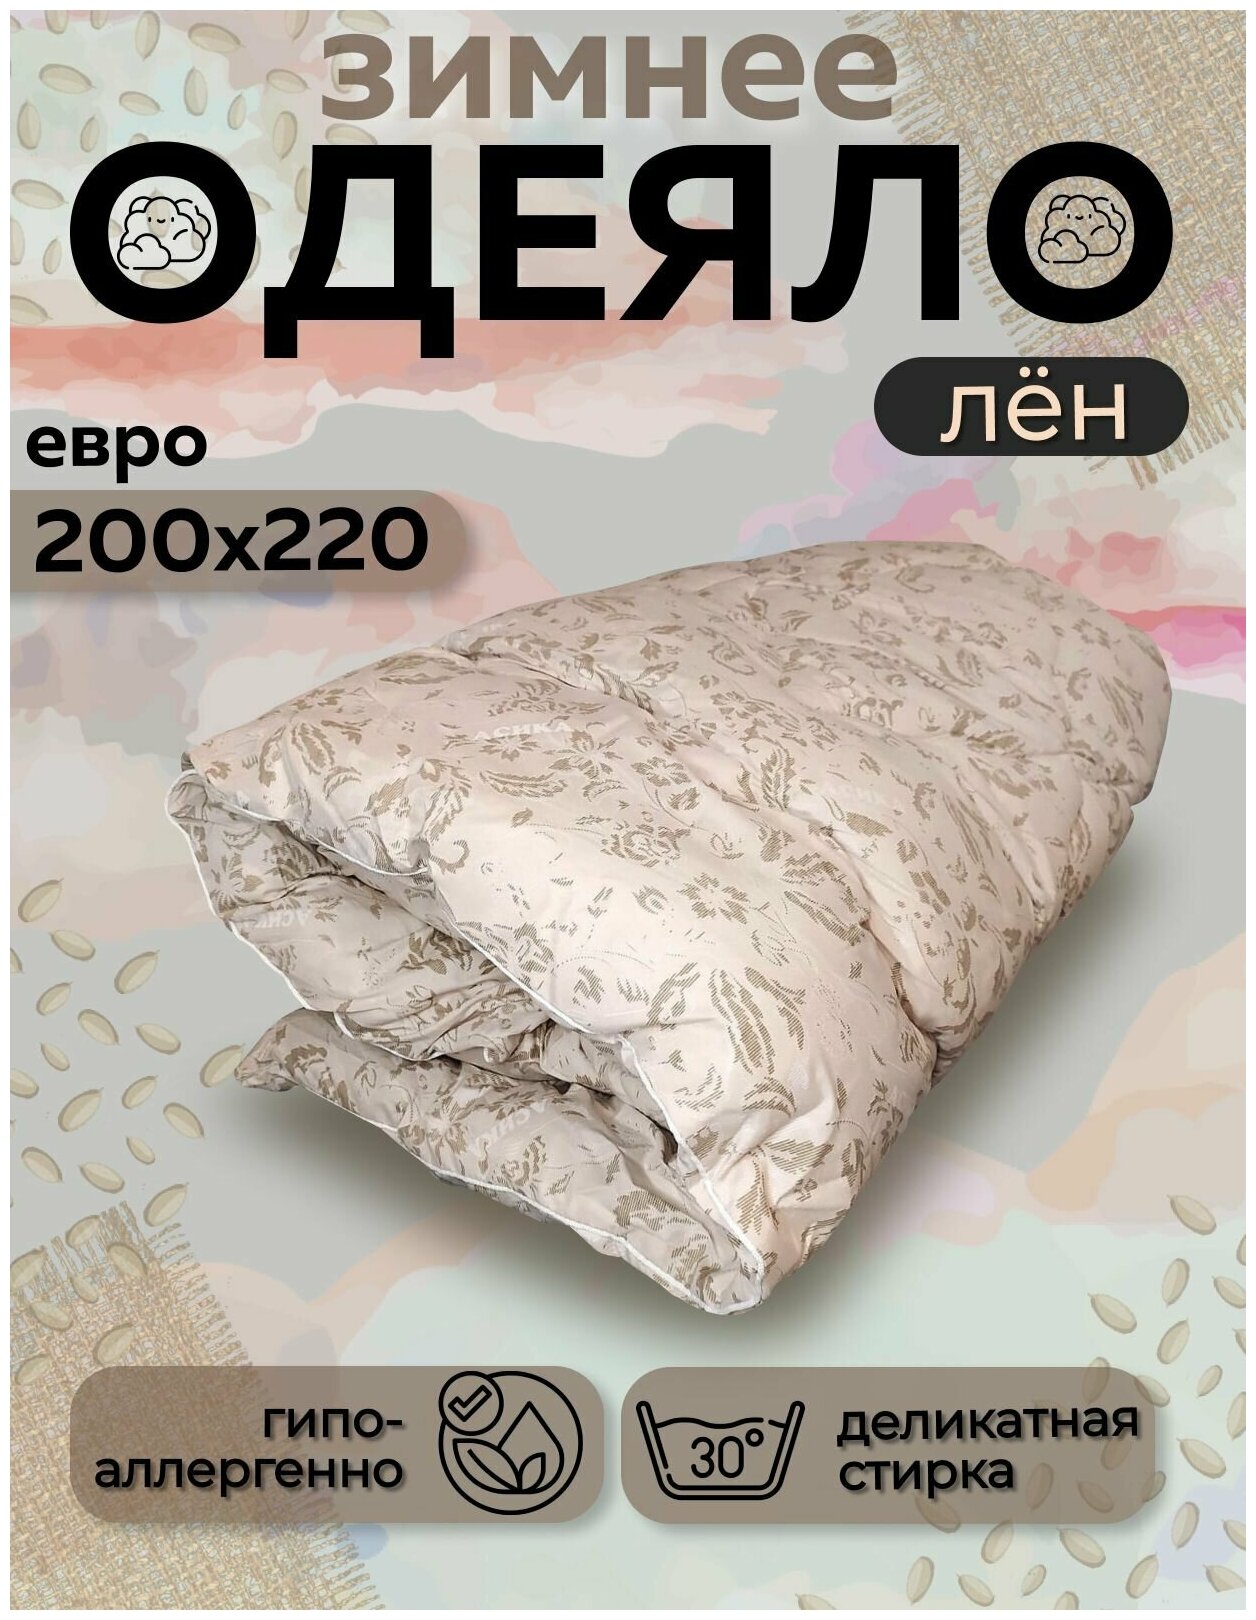 Одеяло Асика евро 200x220 см, зимнее с наполнителем льняное волокно